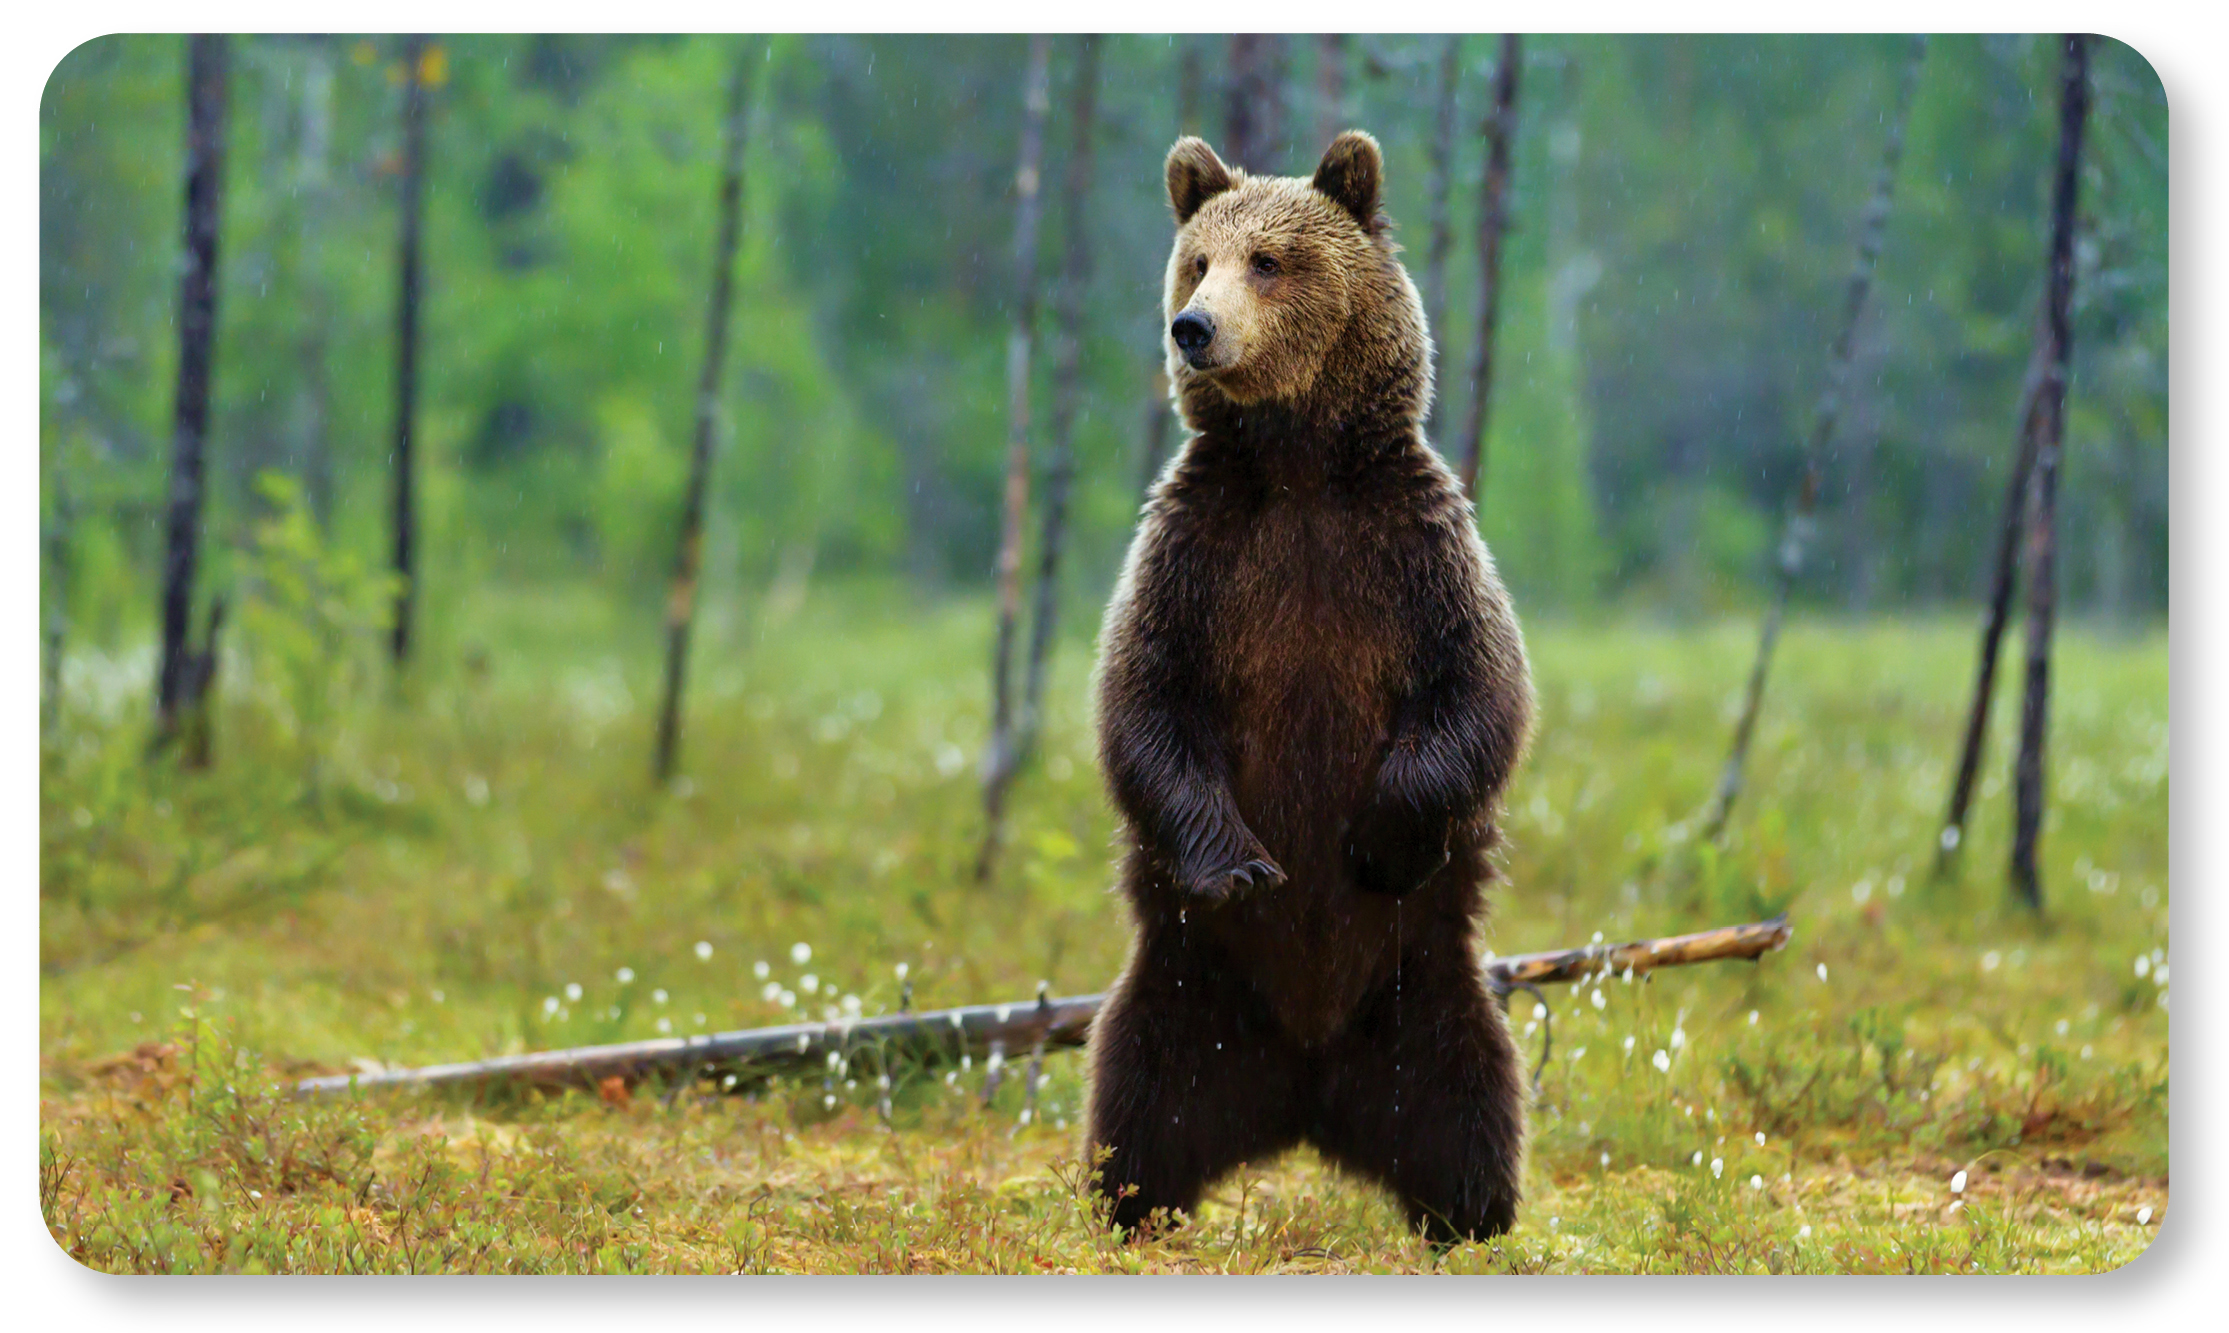 brown bear standing upright in field